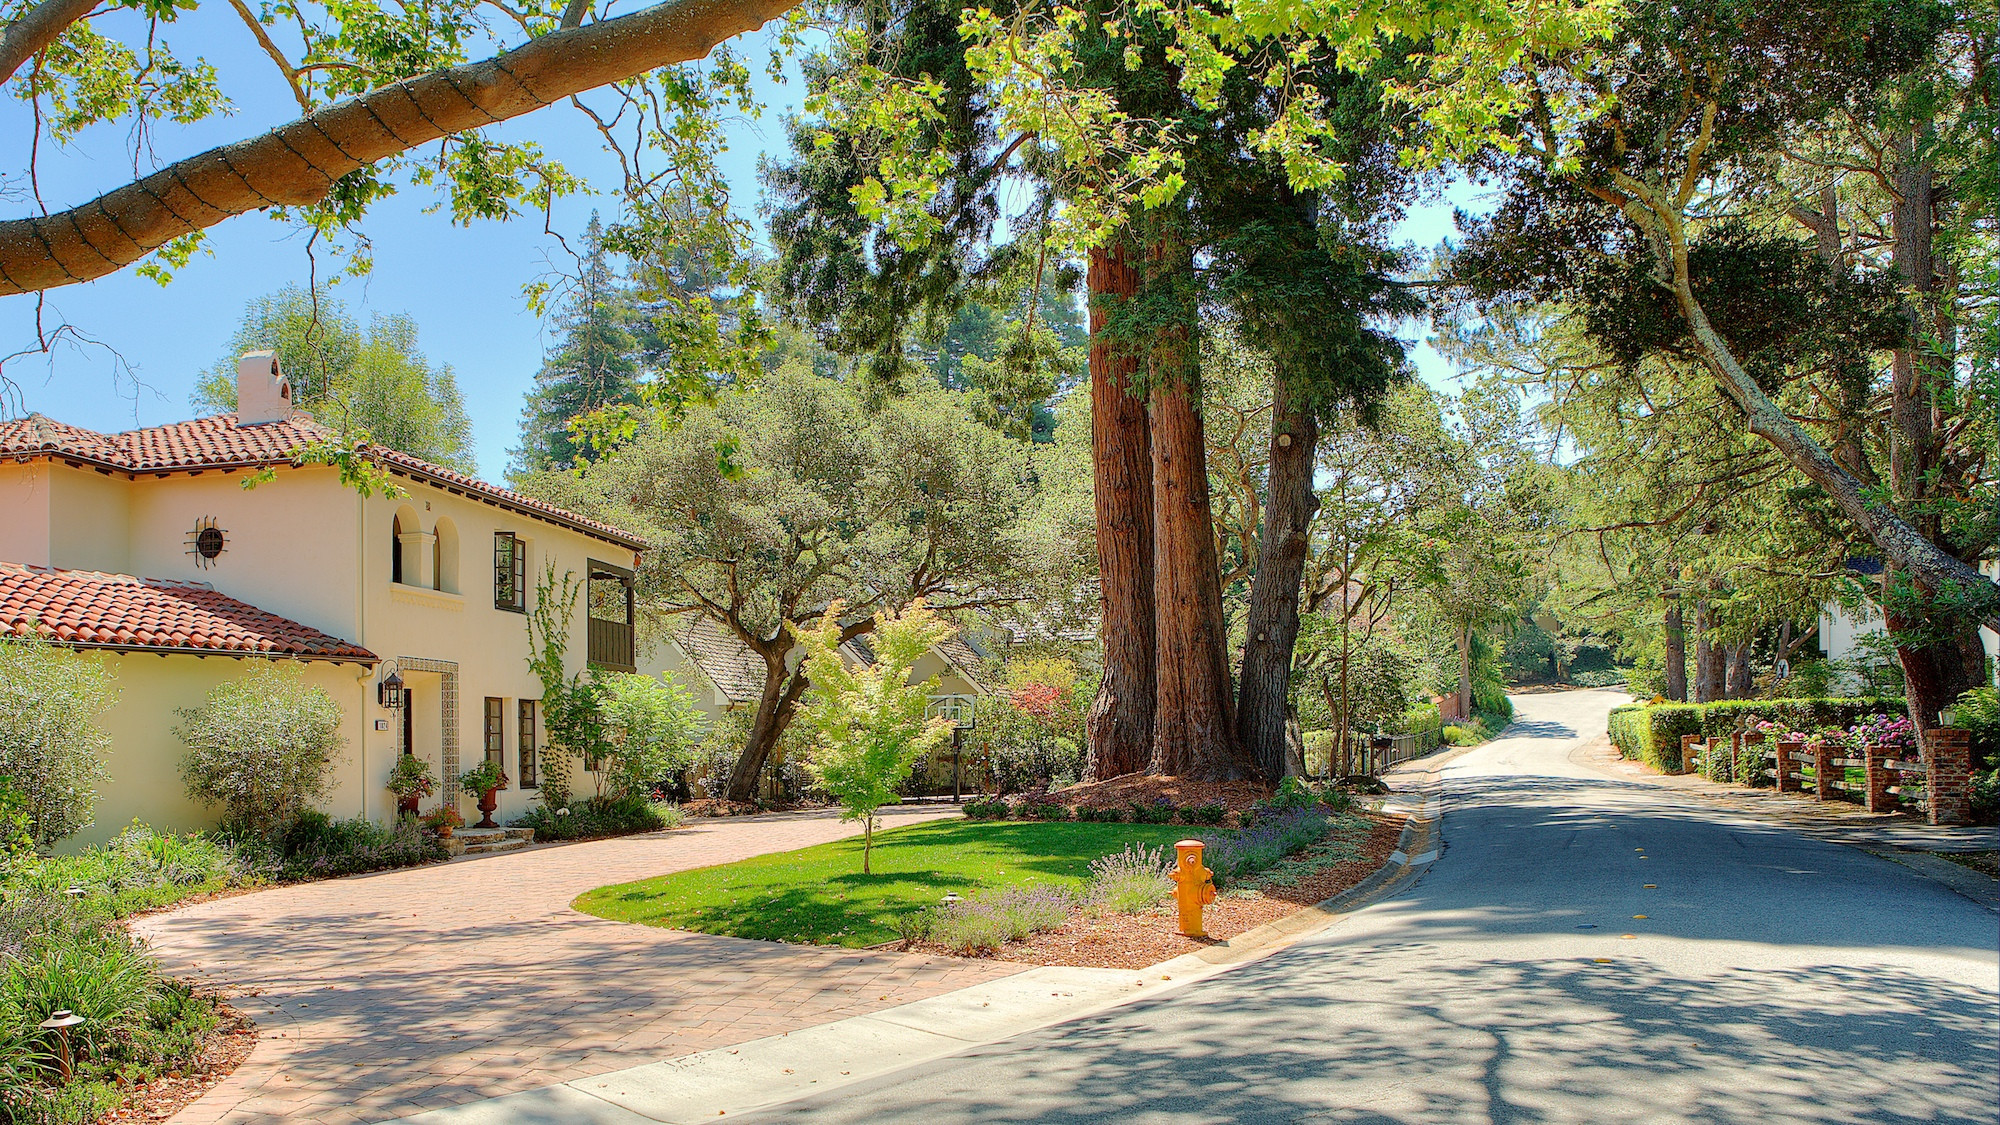 Hillsborough Oakbridge home on a lush tree-lined street